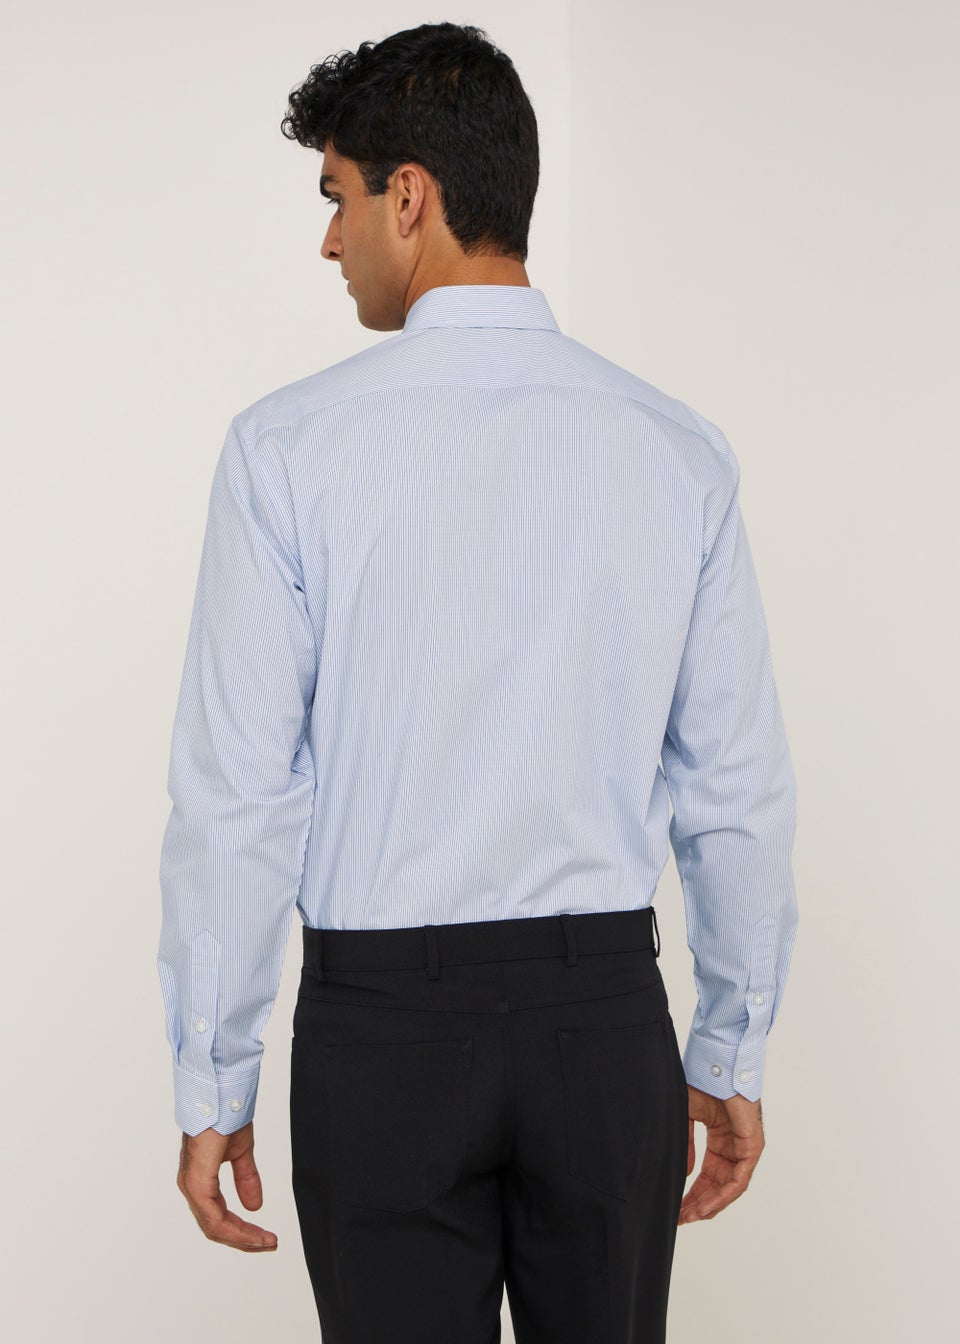 Taylor & Wright Blue Stripe Regular Fit Shirt